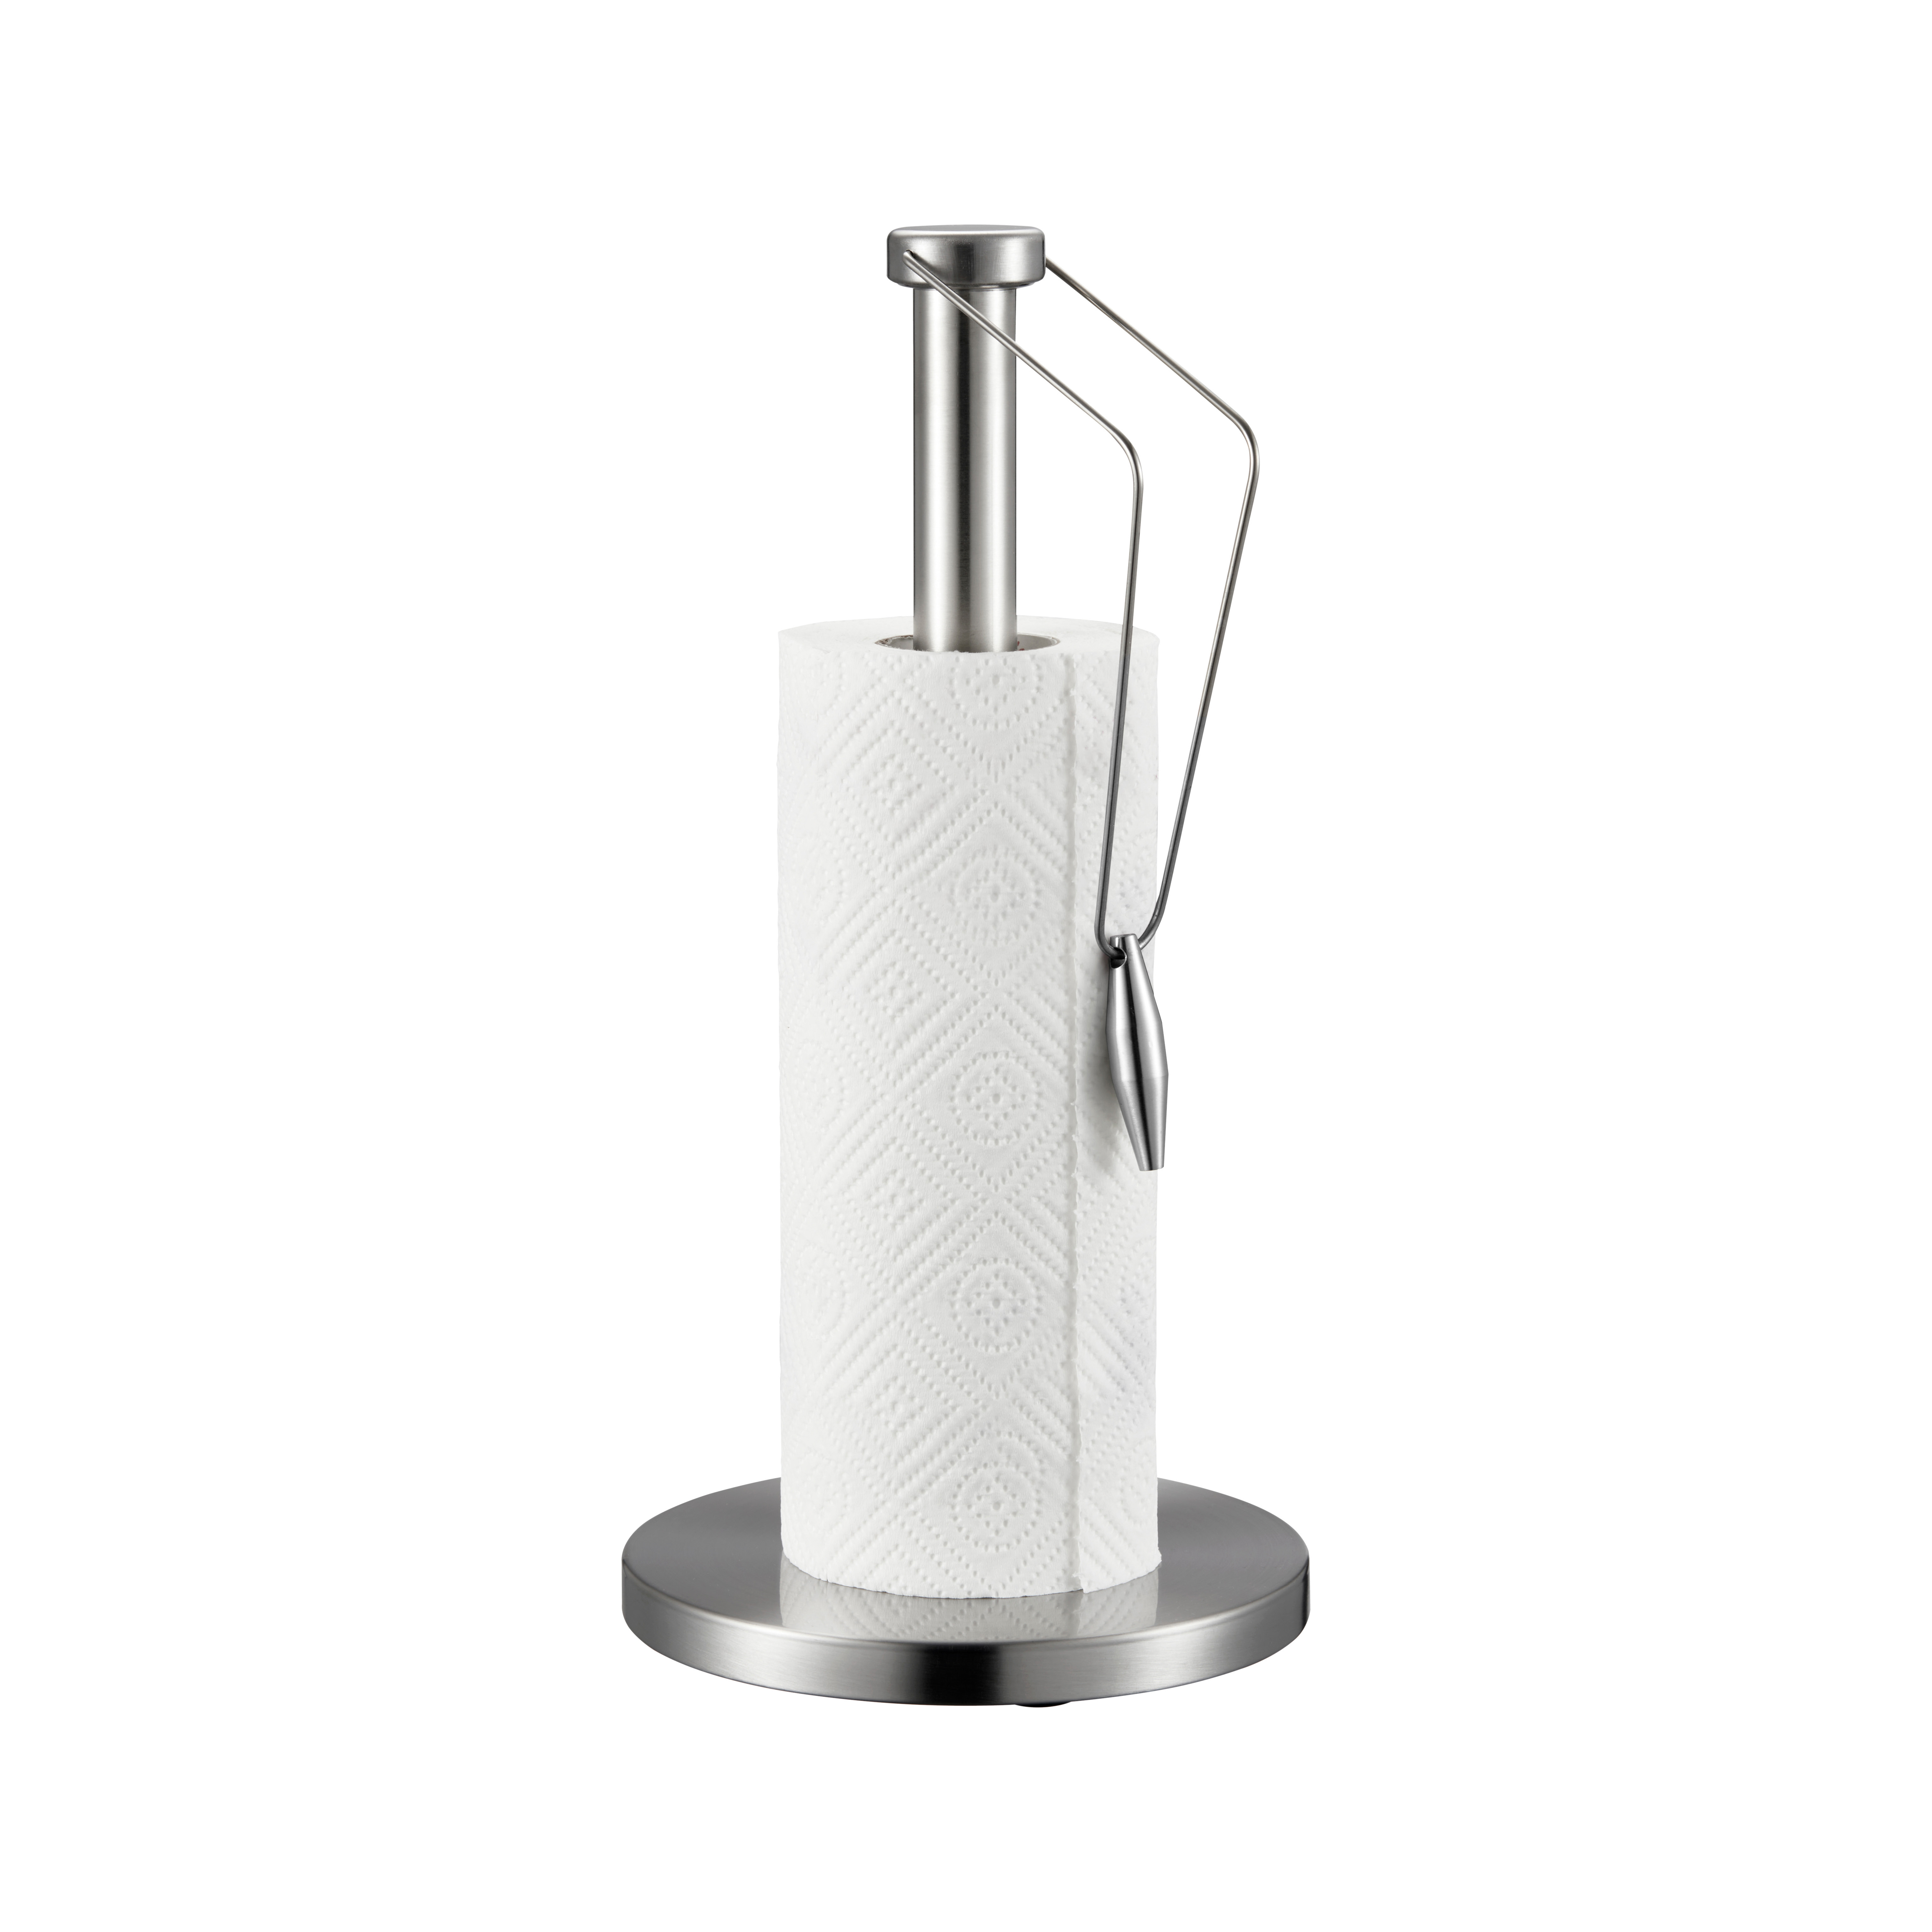 ALFREDO modern kitchen roll holder in polished stainless steel